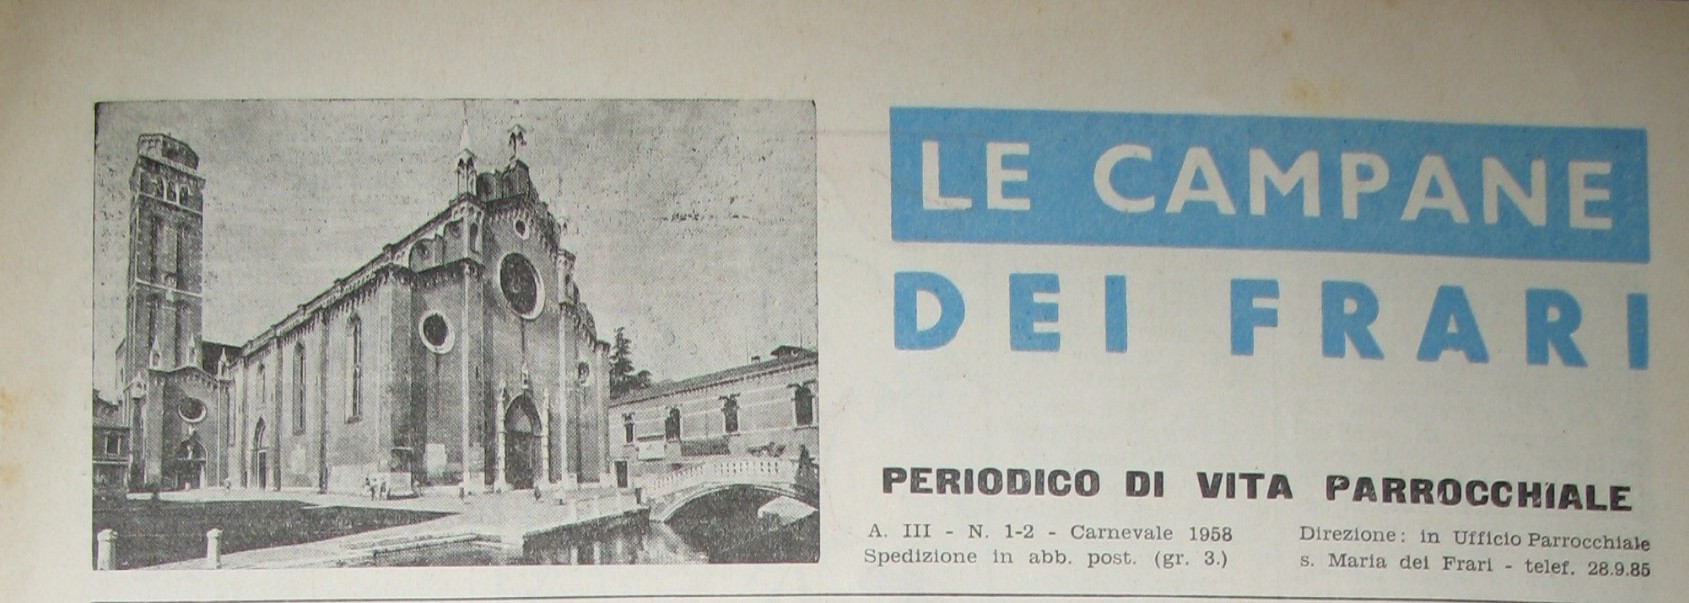 "Le Campane dei Frari", 1956-1959